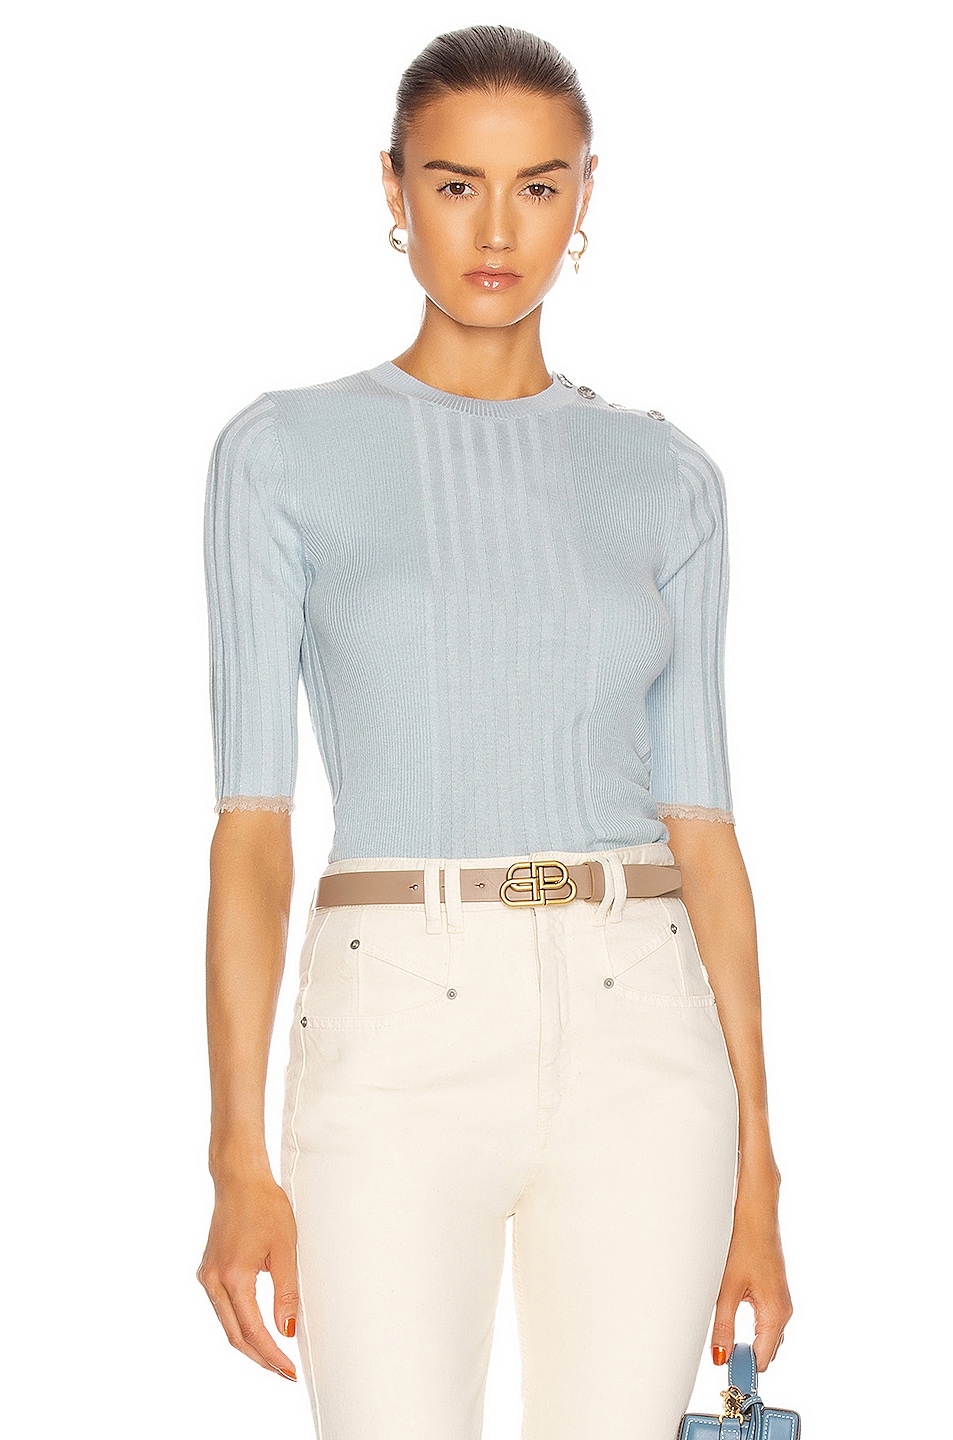 Proenza Schouler Short Sleeve Fitted Sweater in Light Blue | FWRD